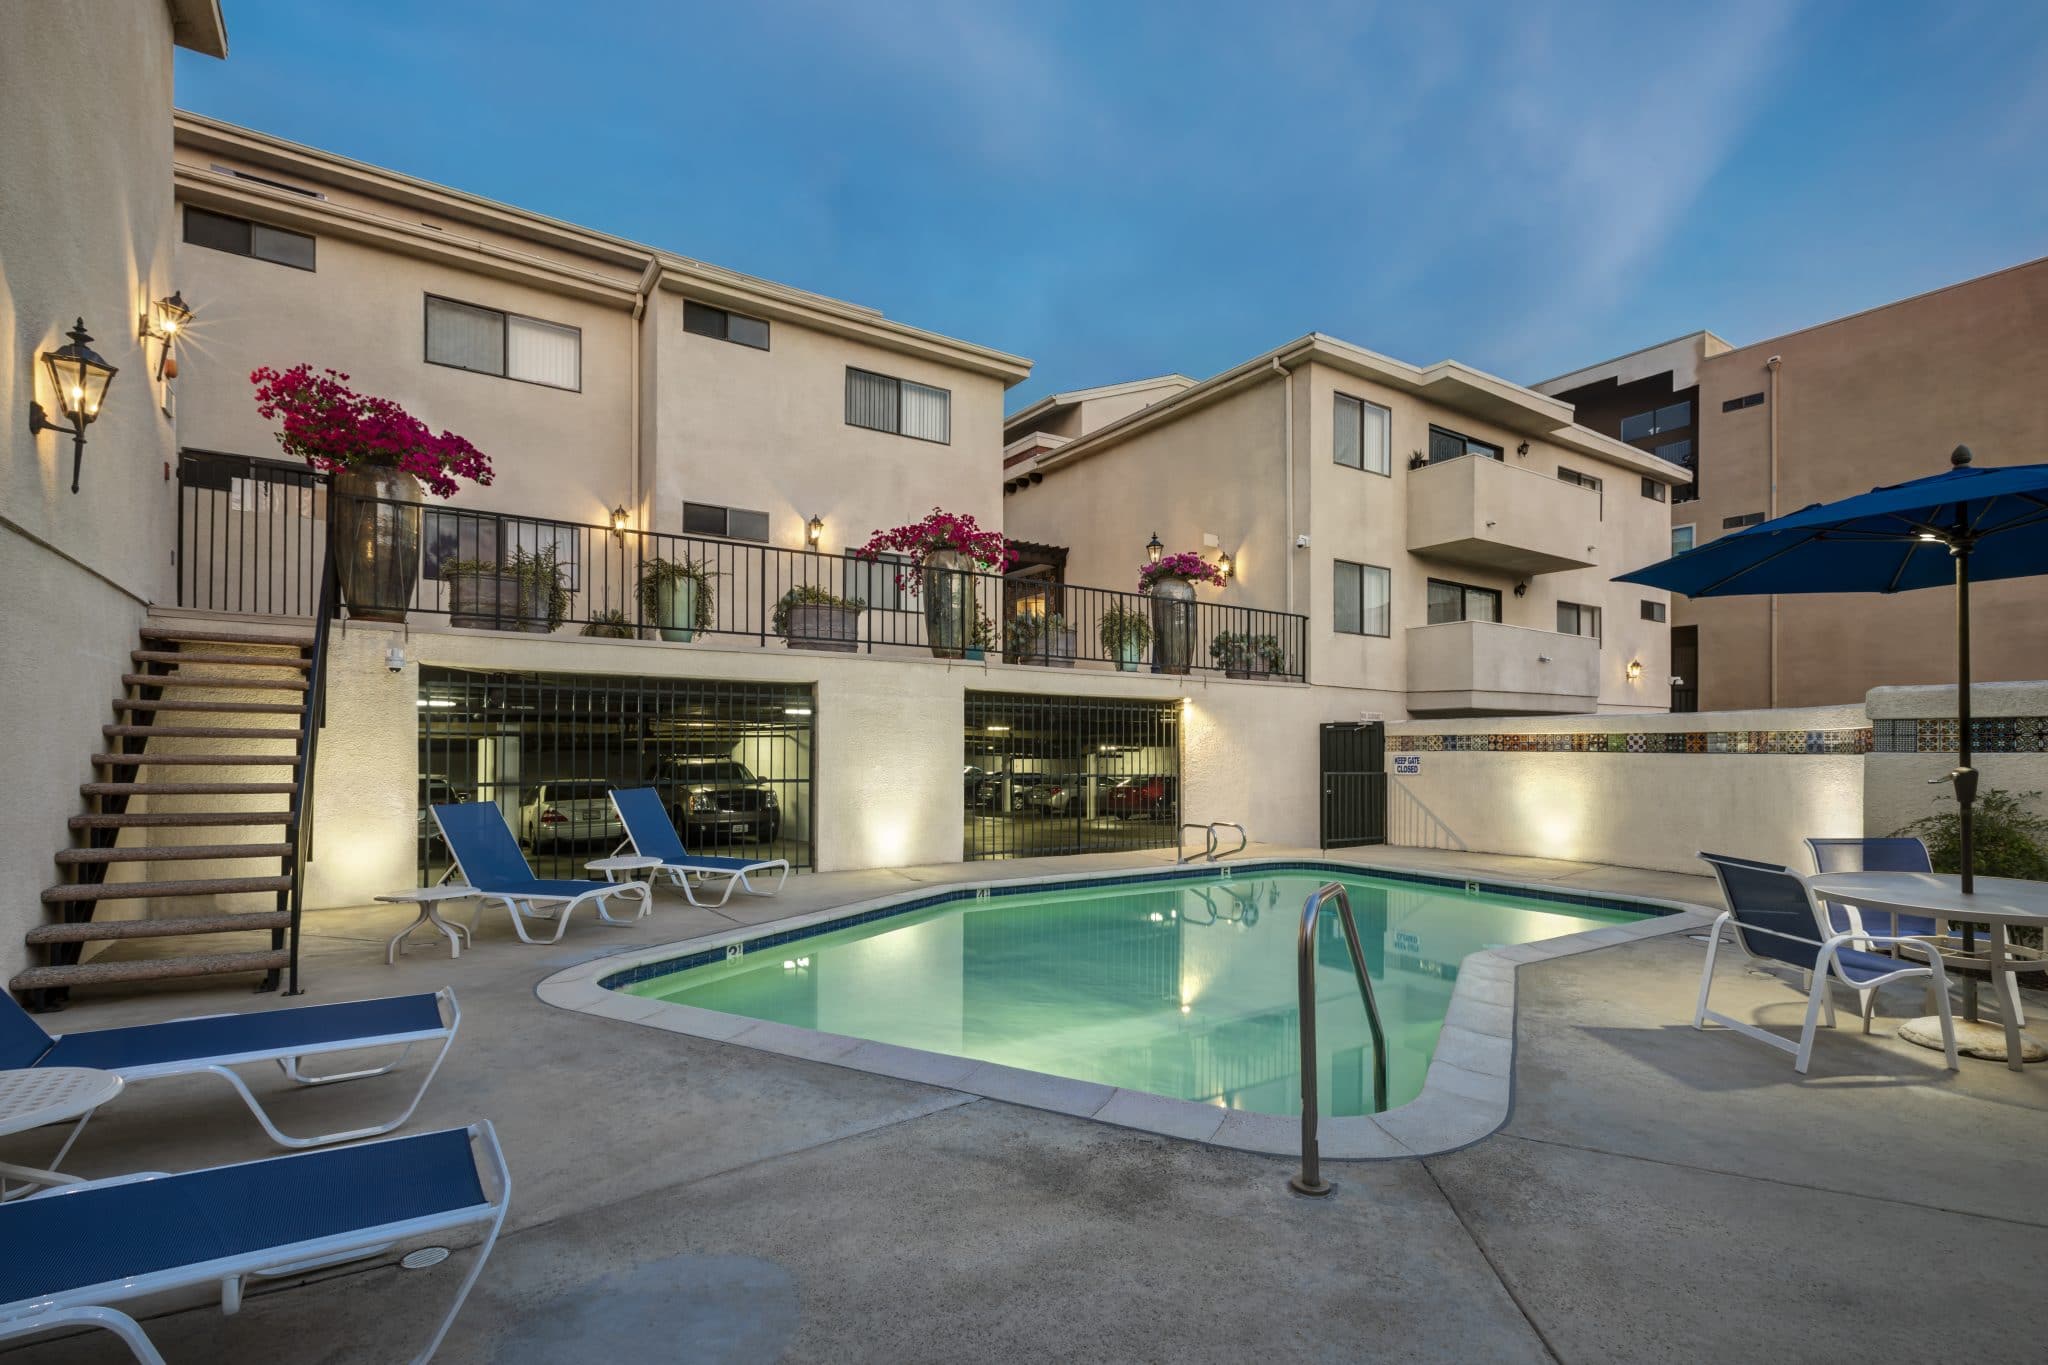 Apartment For Rent Apartments in Encino California